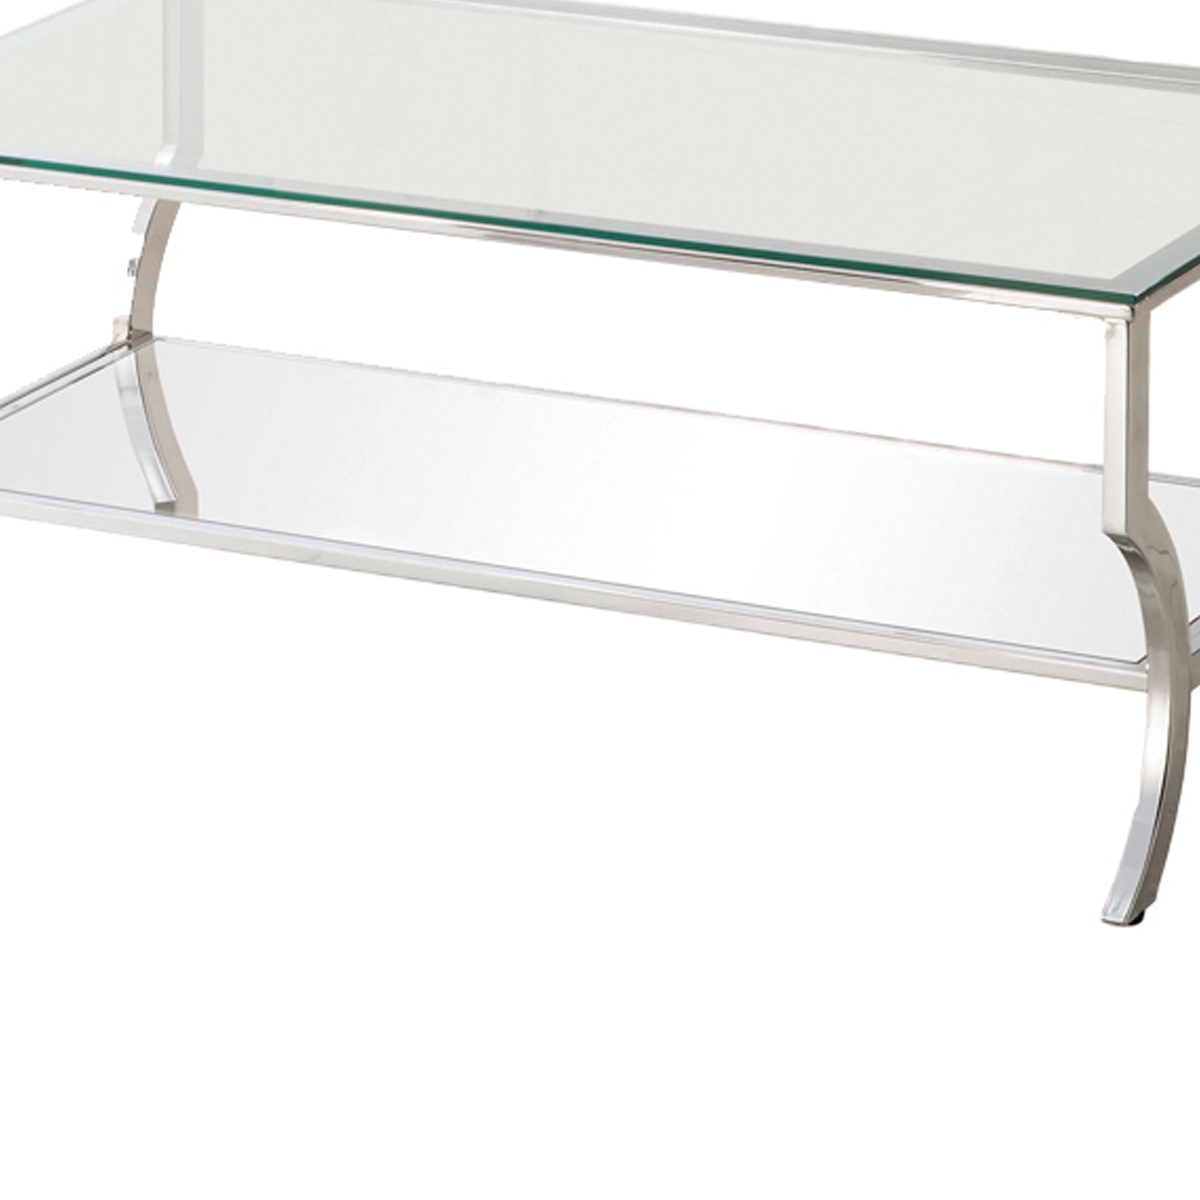 Glass Top Coffee Table With Metal Frame And Mirror Shelf, Chrome- Saltoro Sherpi